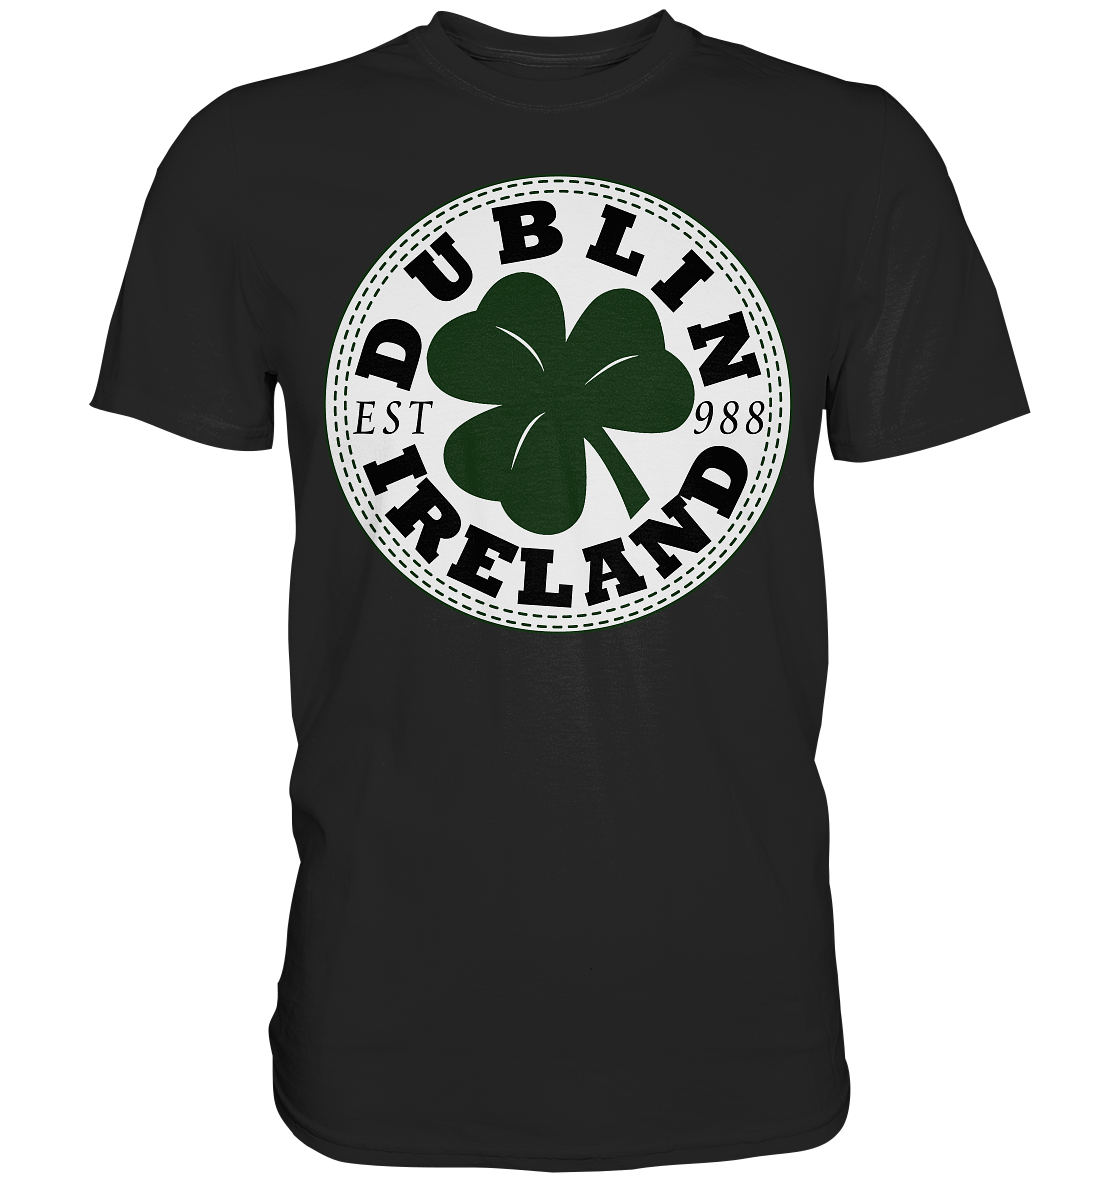 Dublin "Ireland / Est 988" - Premium Shirt